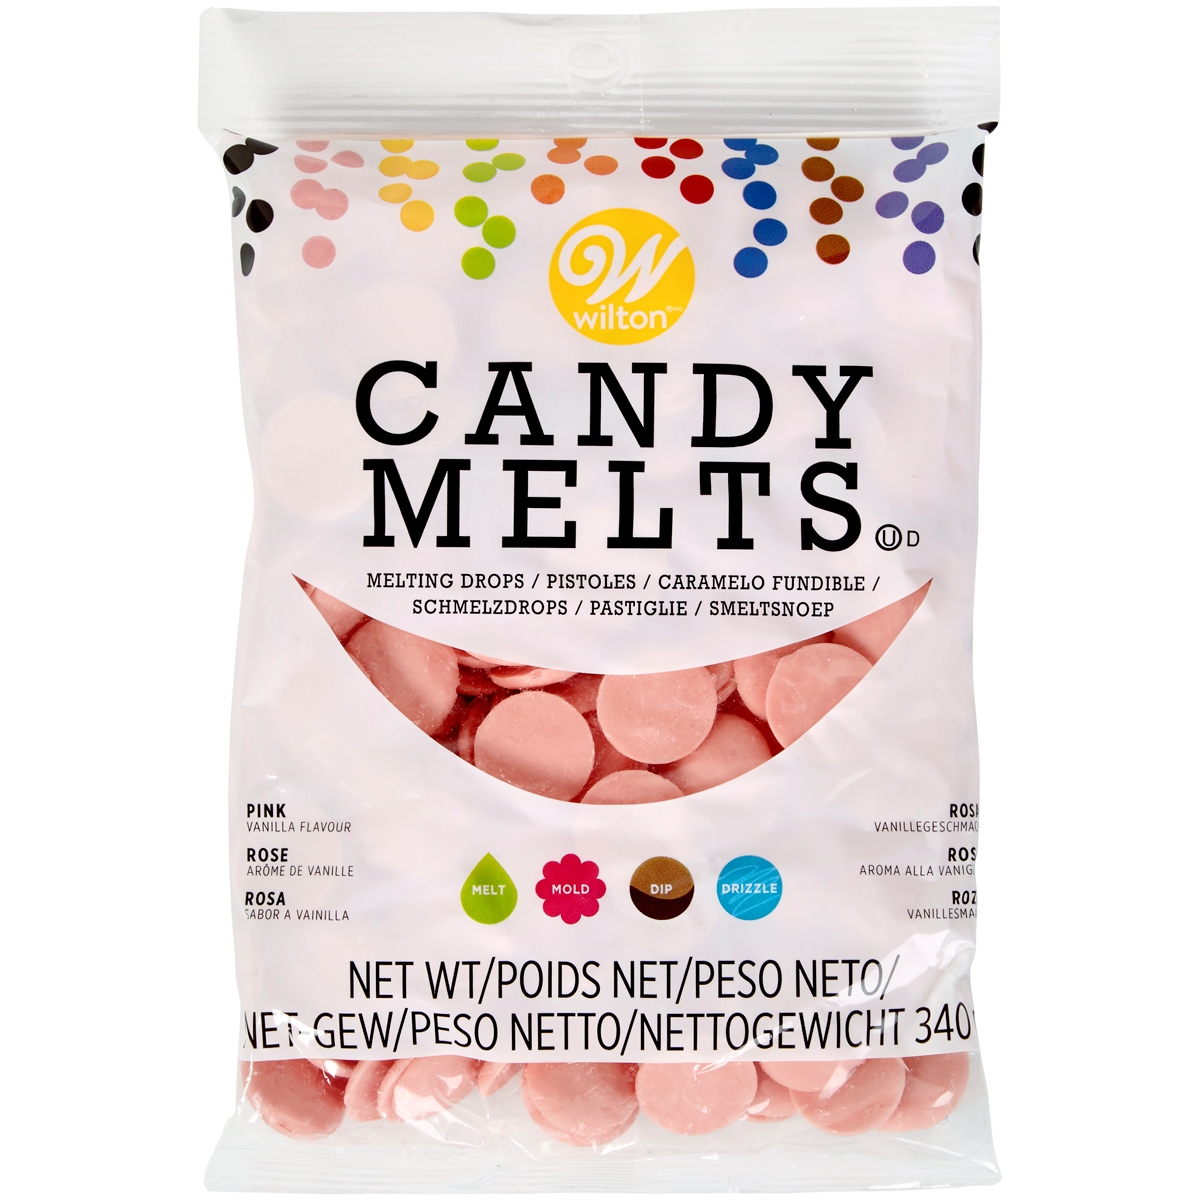 Candy melts kopen? Beschikbaar in kleuren!